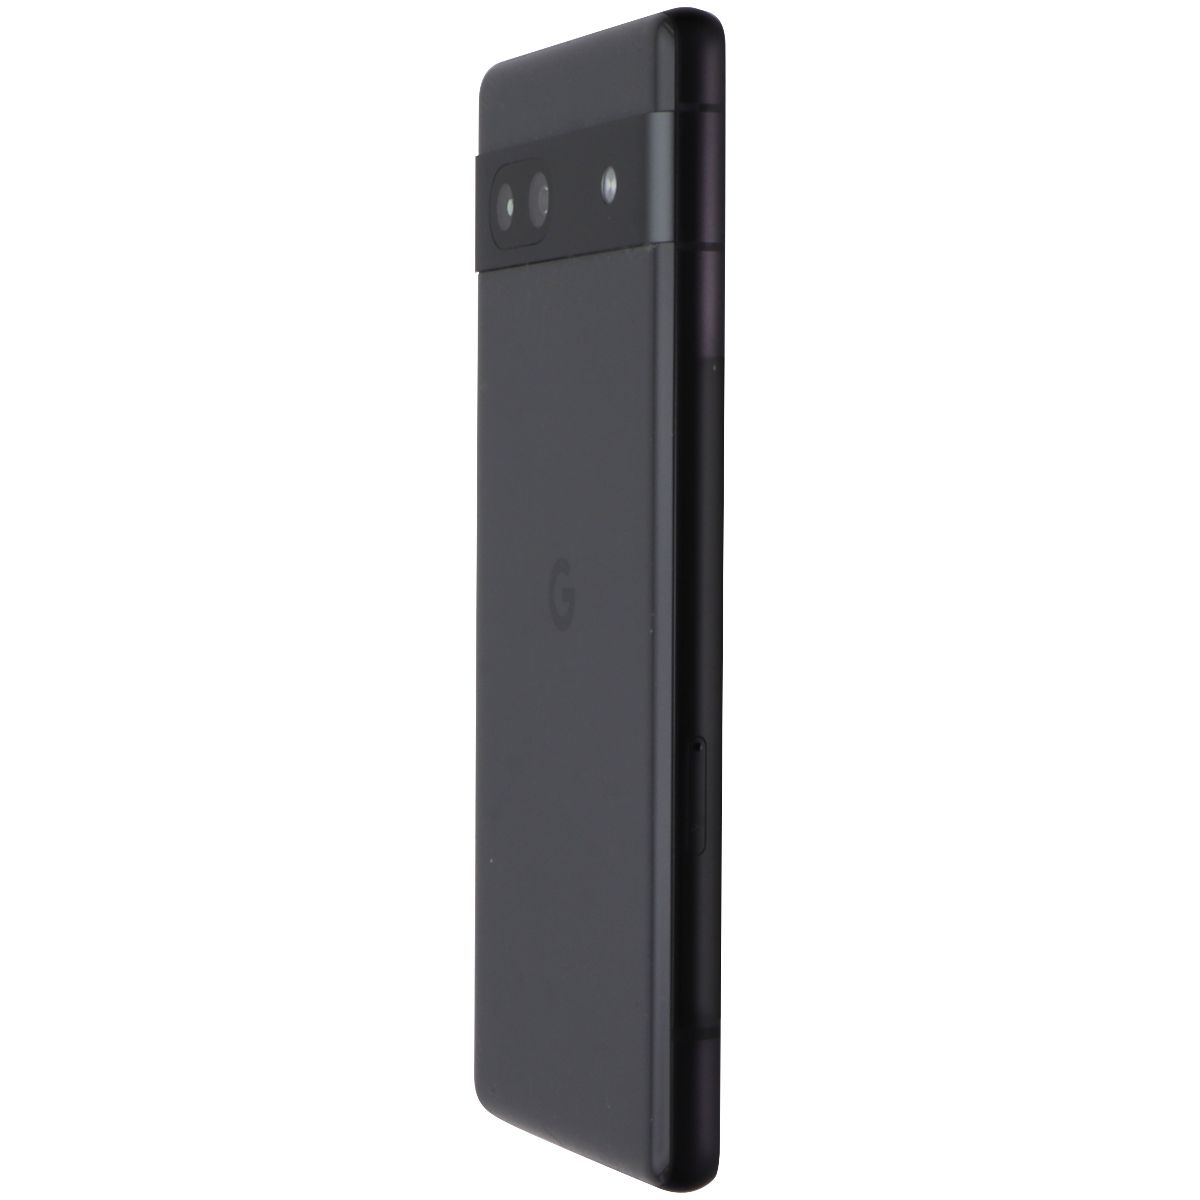 Google Pixel 7a (6.1-inch) Smartphone (G0DZQ) Verizon Only - 128GB/Charcoal